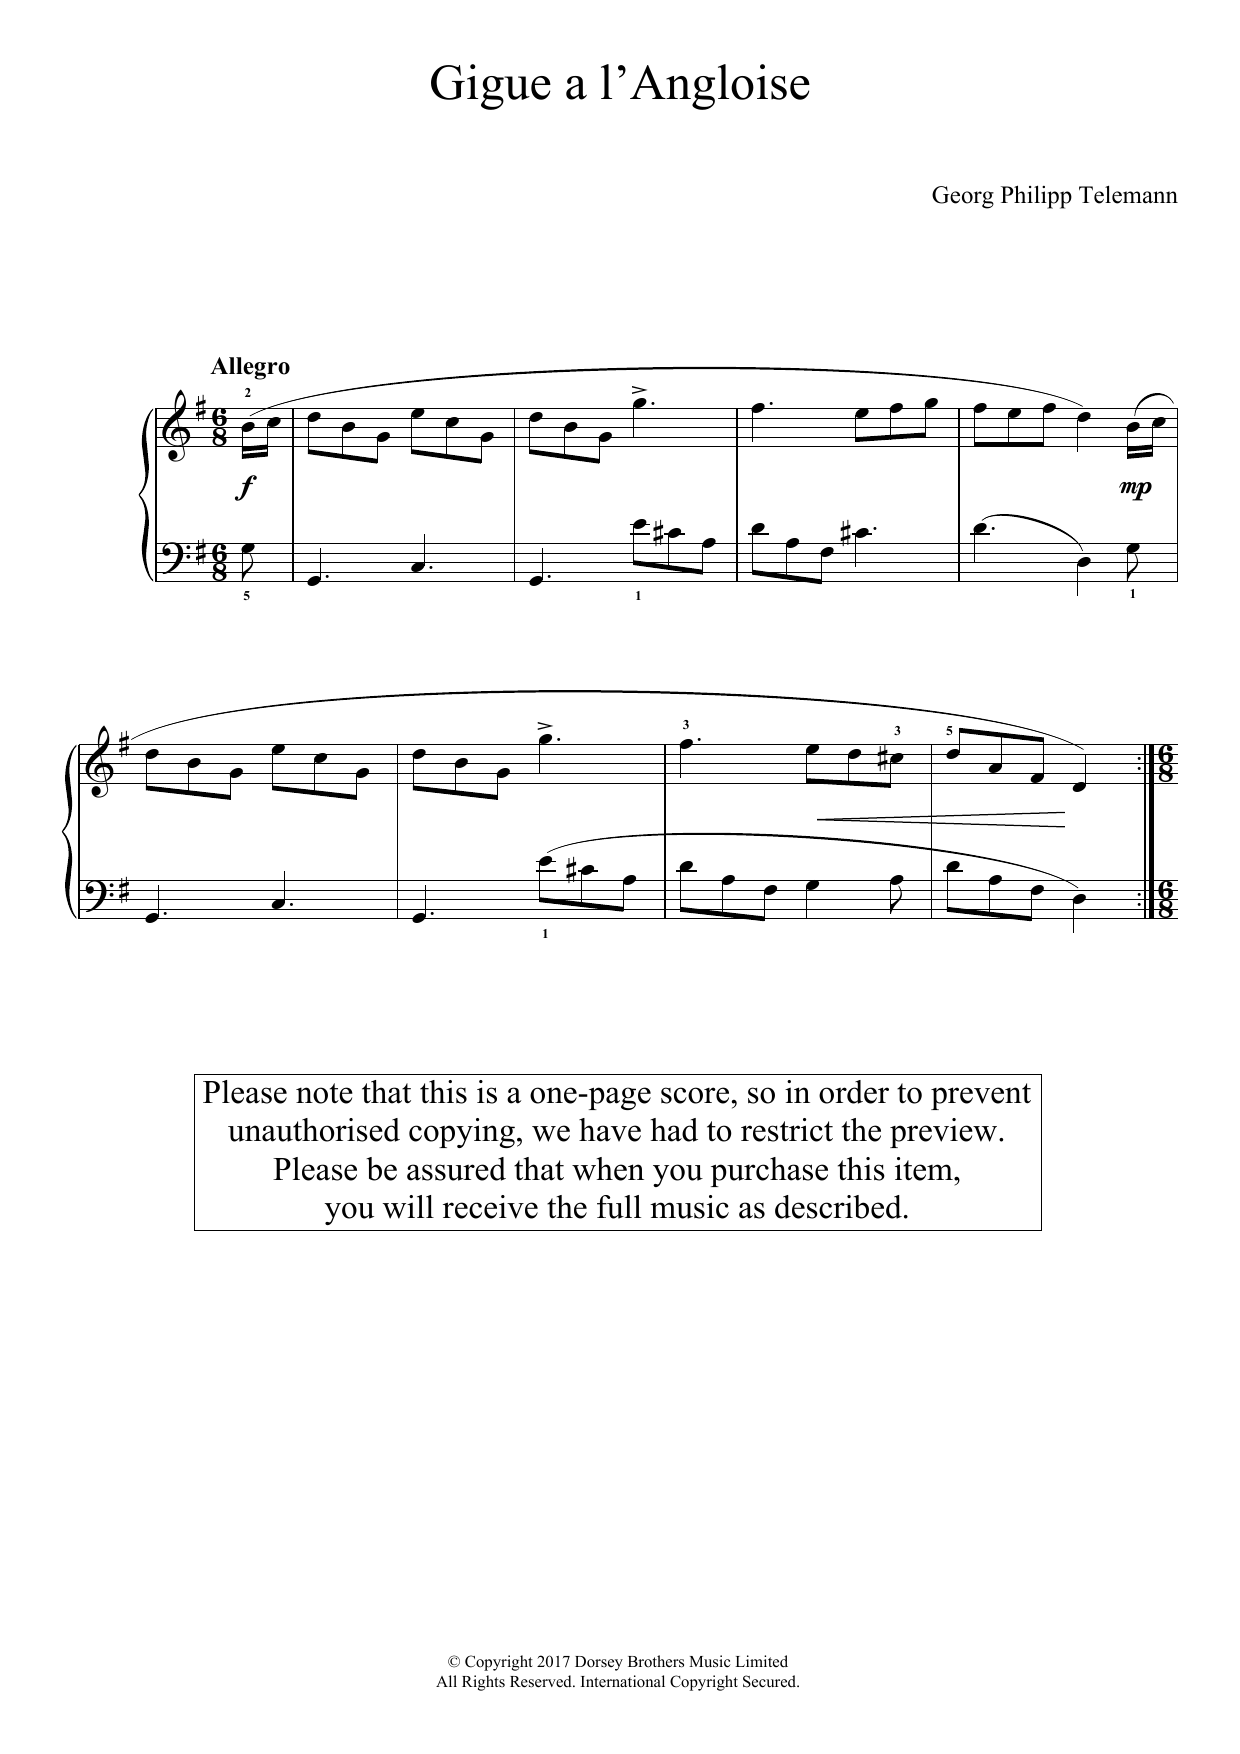 Download Georg Philipp Telemann Gigue A L'angliose Sheet Music